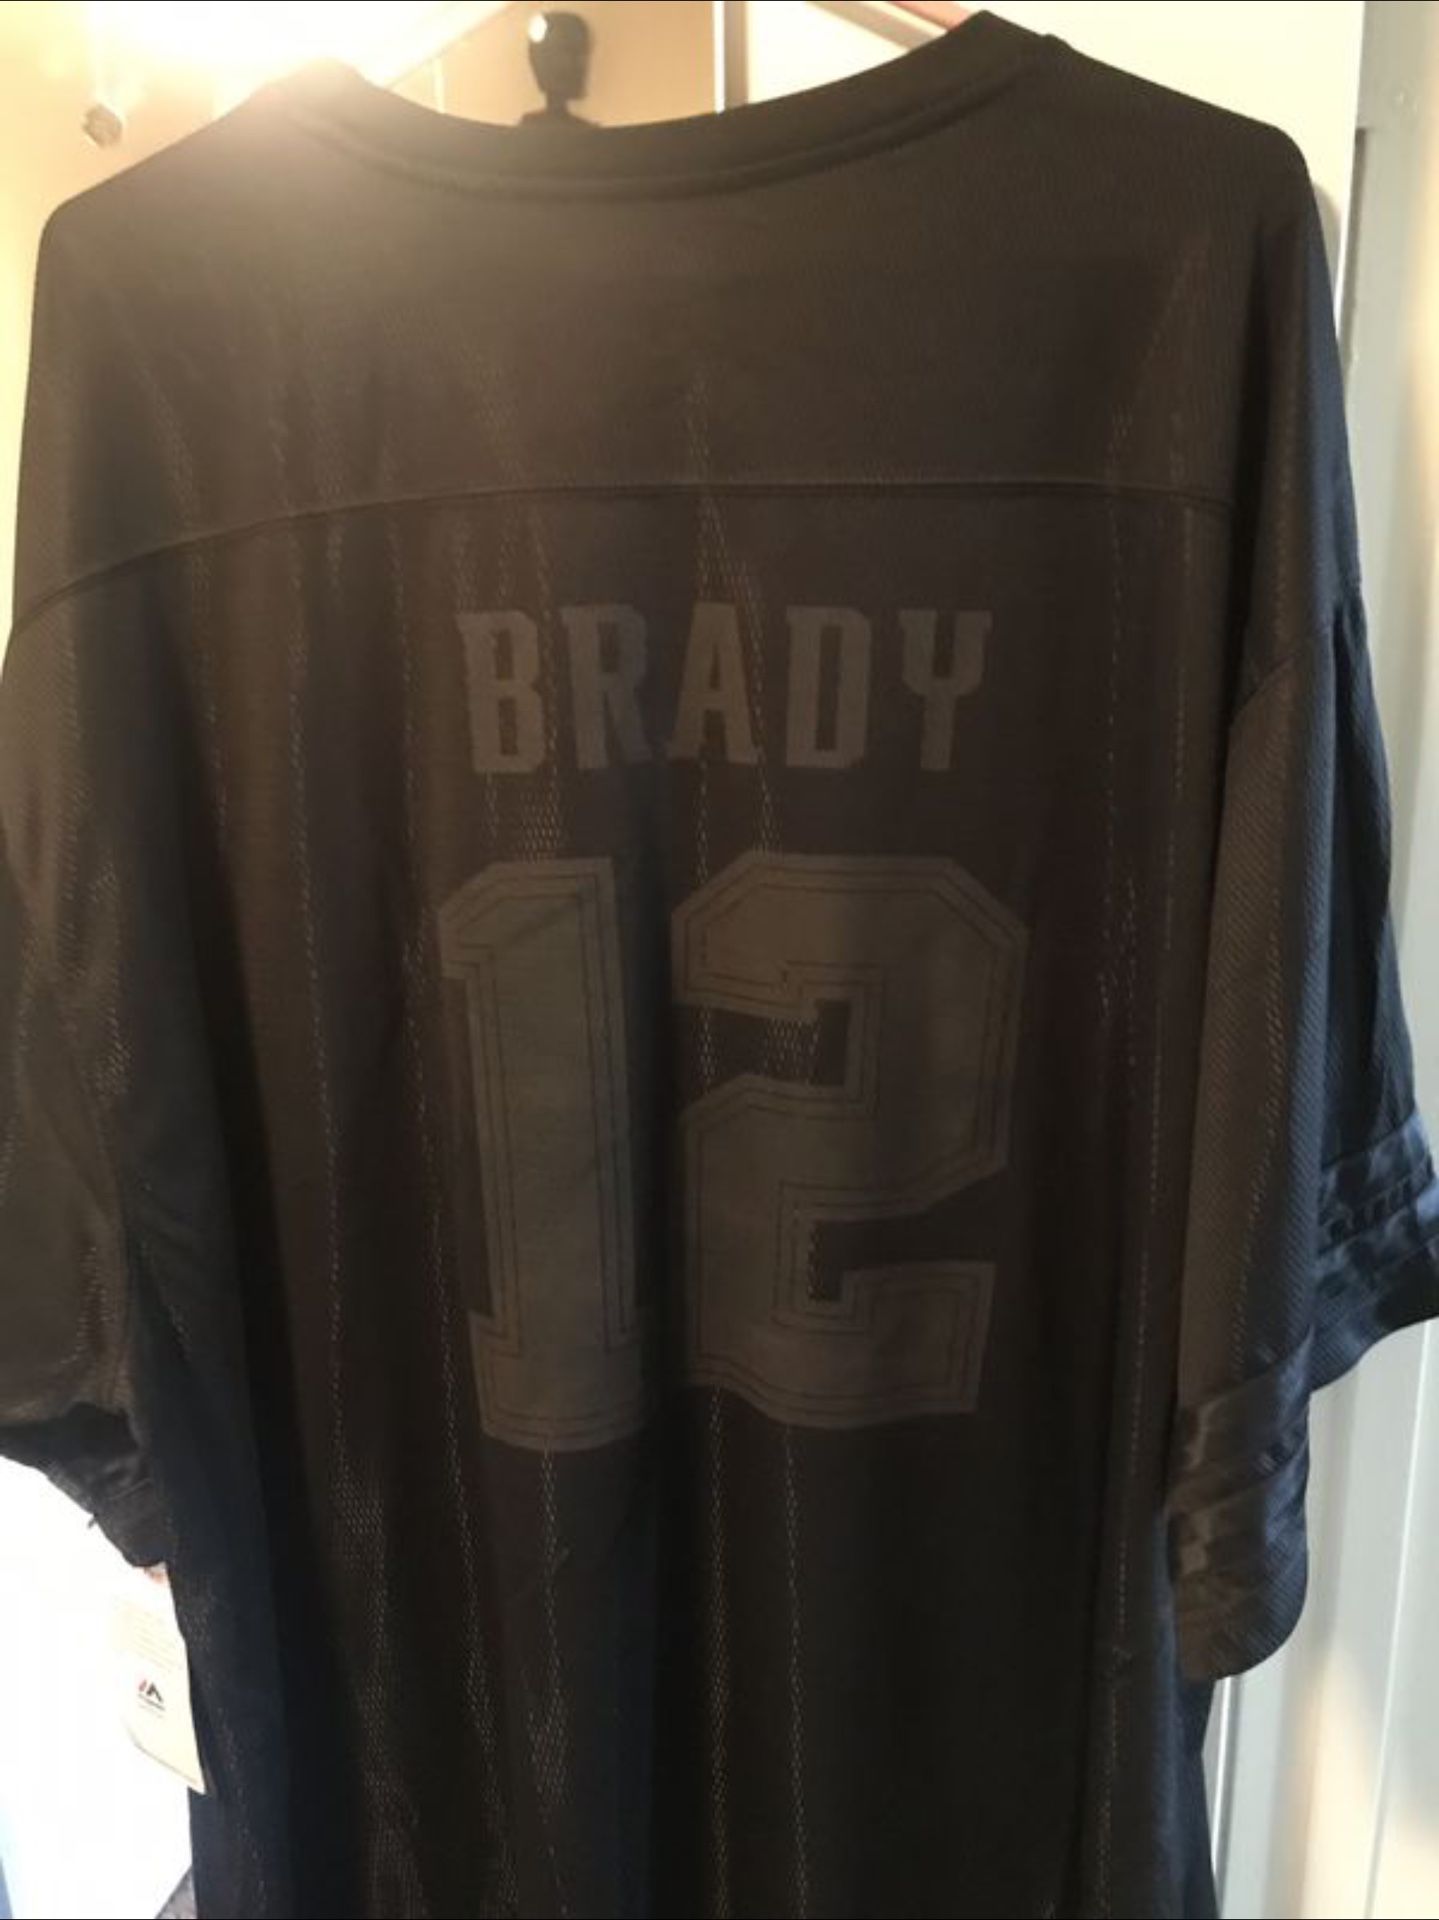 New New England Patriots Black jersey Brady size 3 XT